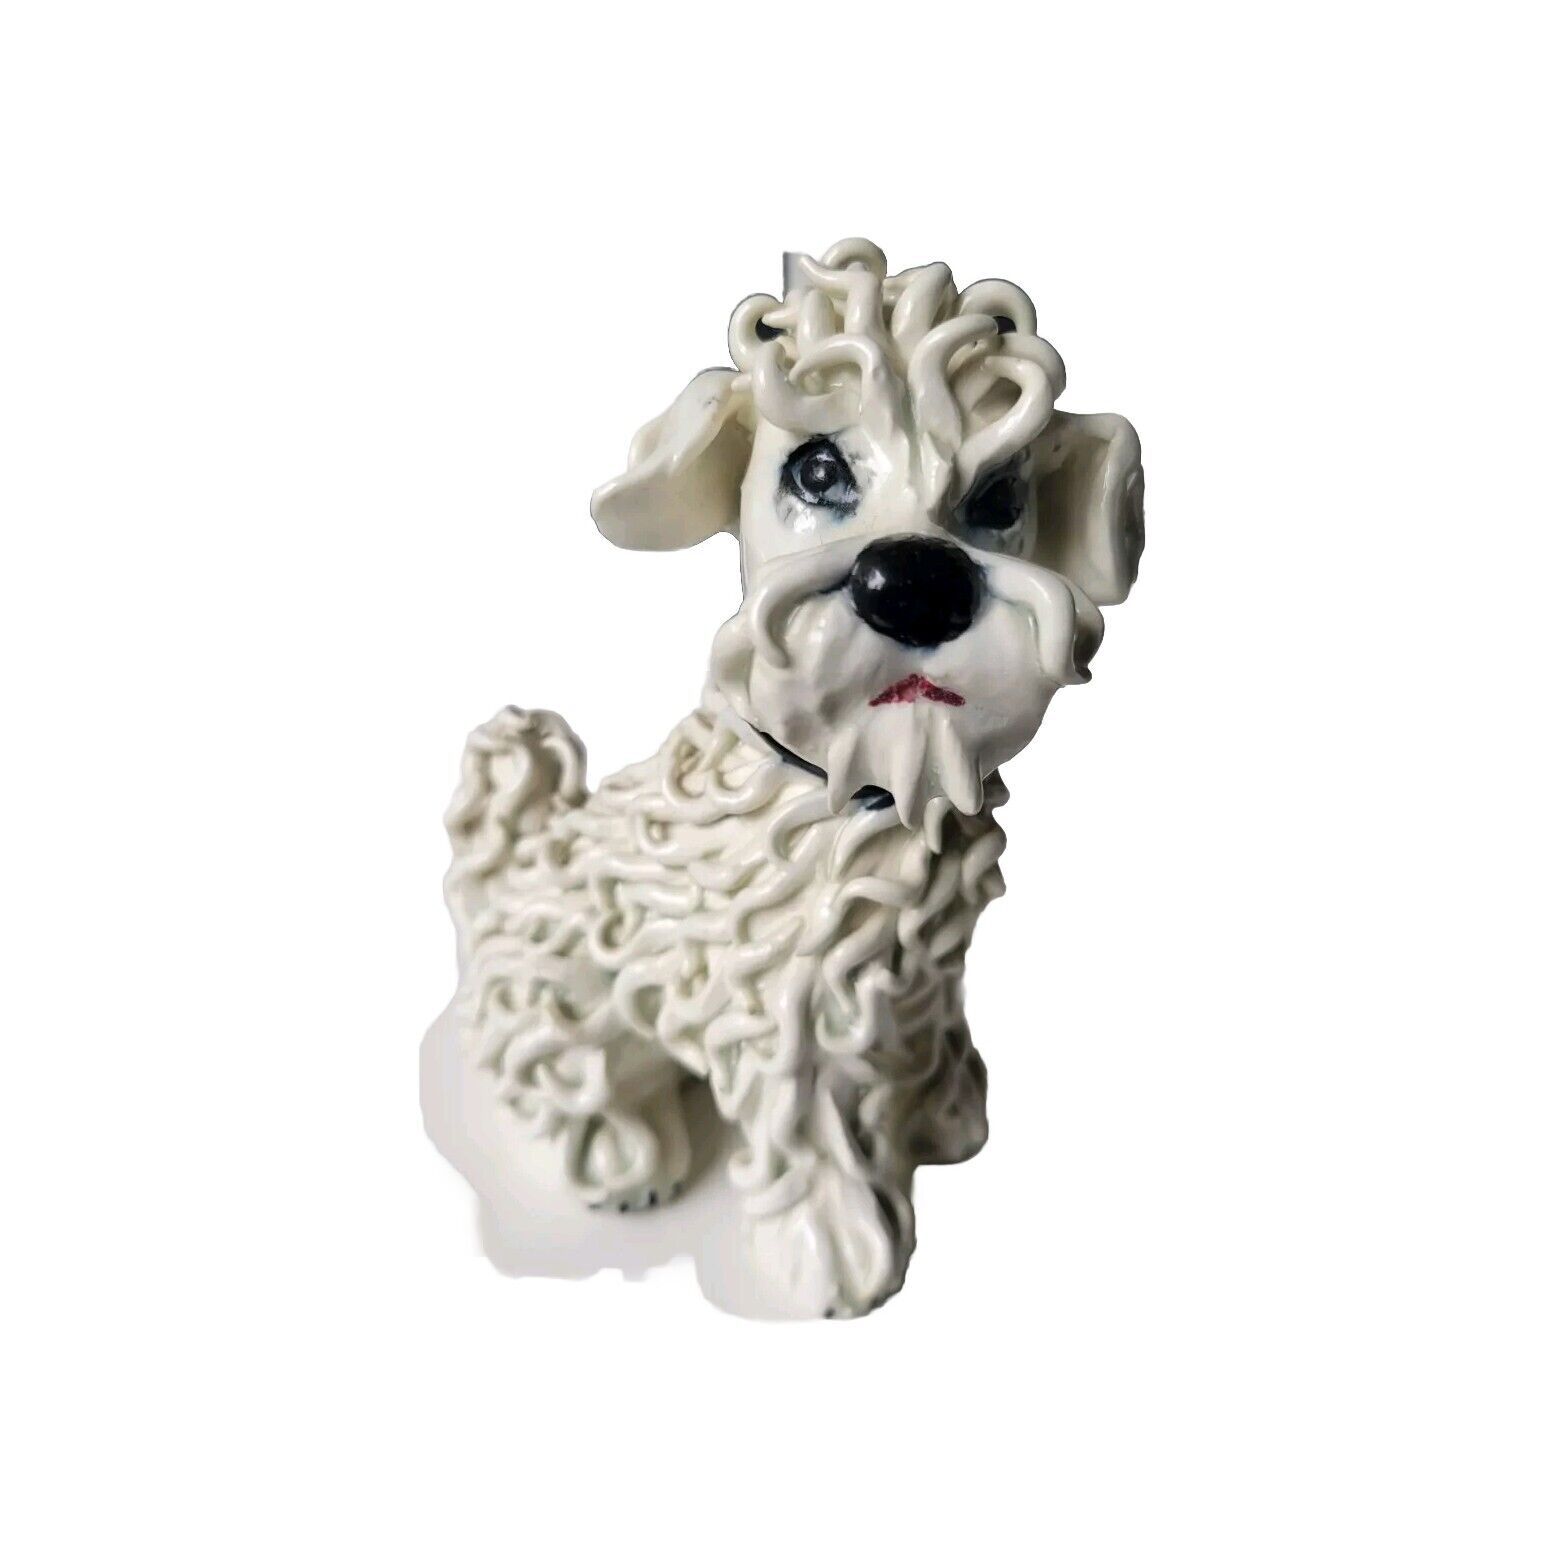 Vintage White Ceramic Sitting Spaghetti Poodle Figurine W/Collar Italy 5” Tall